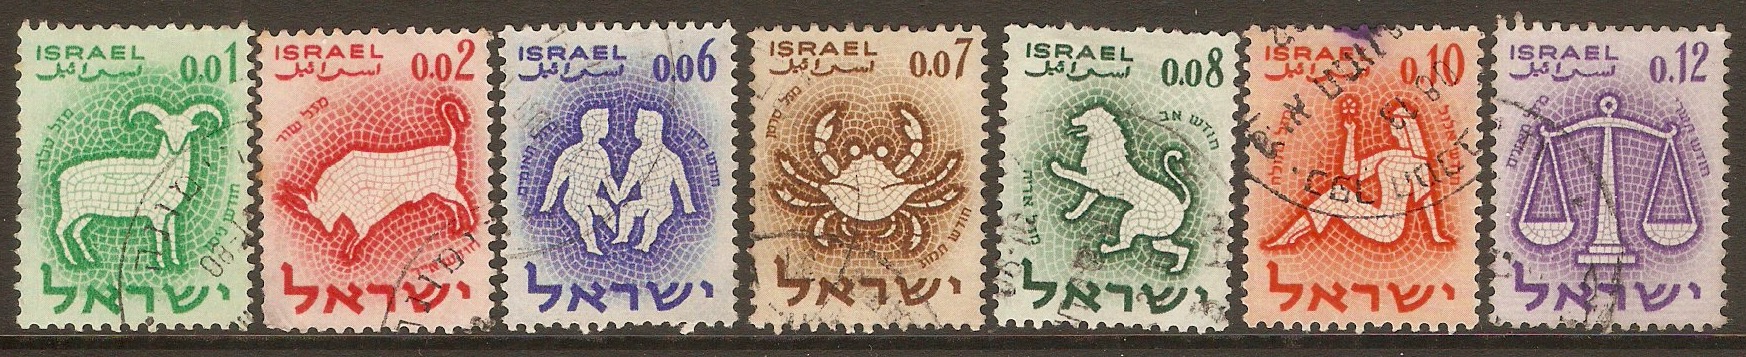 Israel 1961 Signs of the Zodiac set. SG198-SG204.